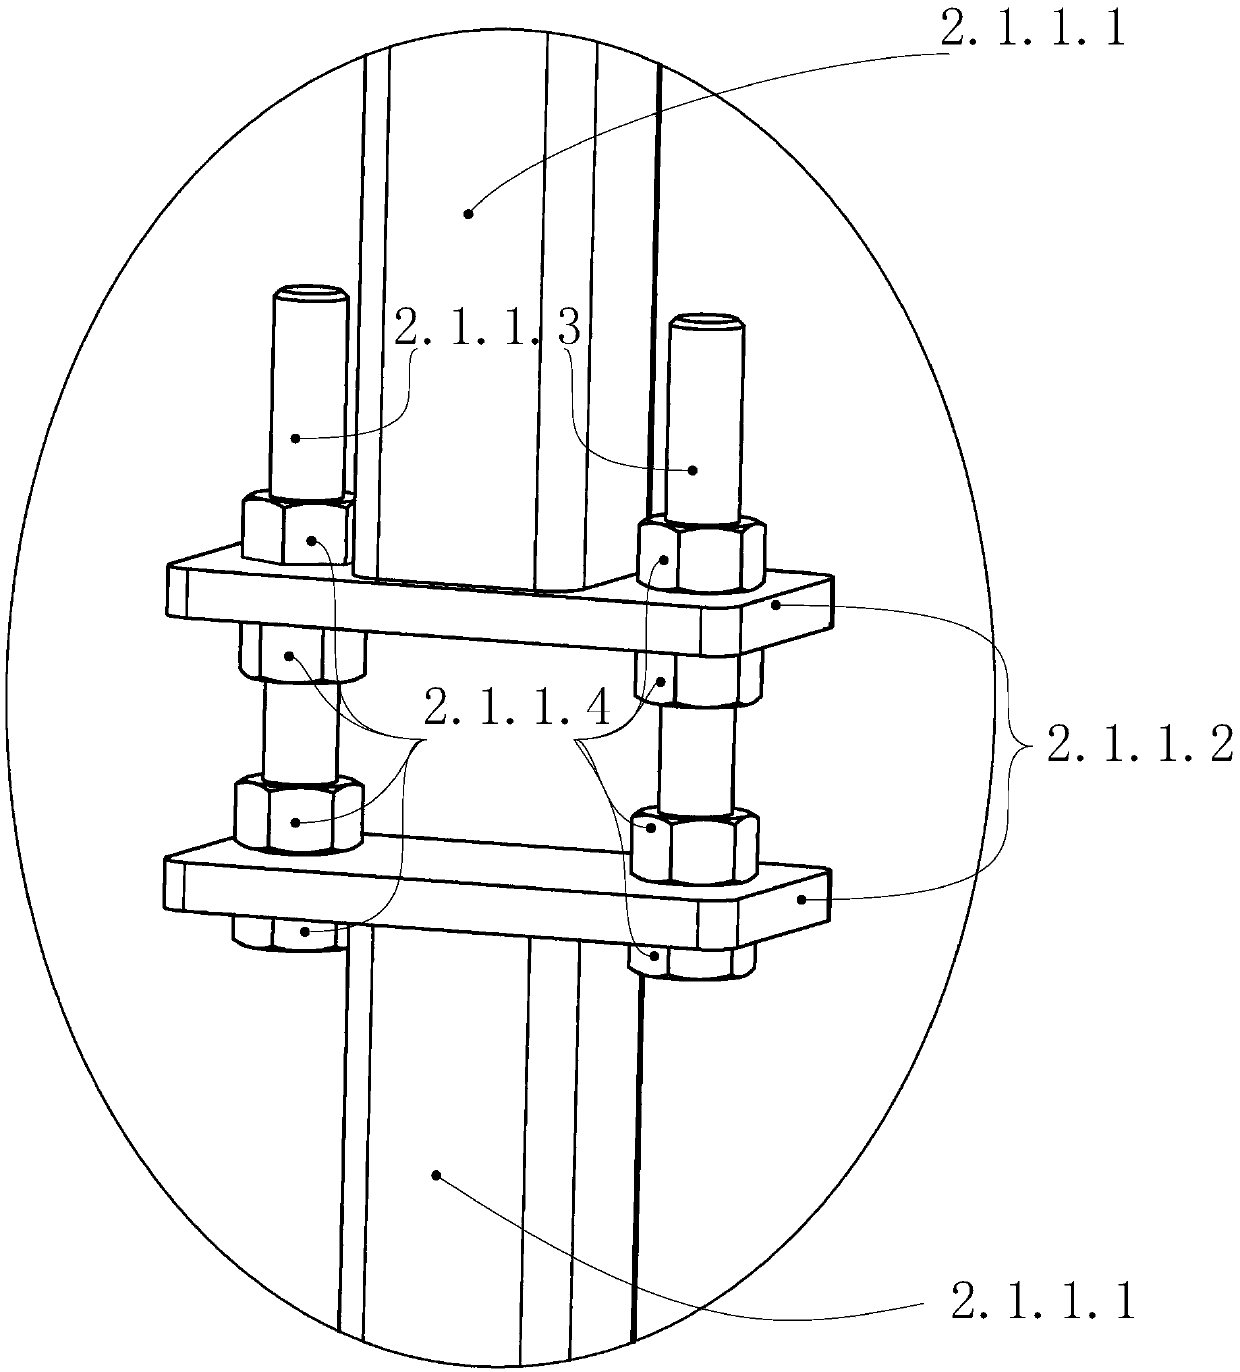 Pipe arranging machine for automatic bobbin winder